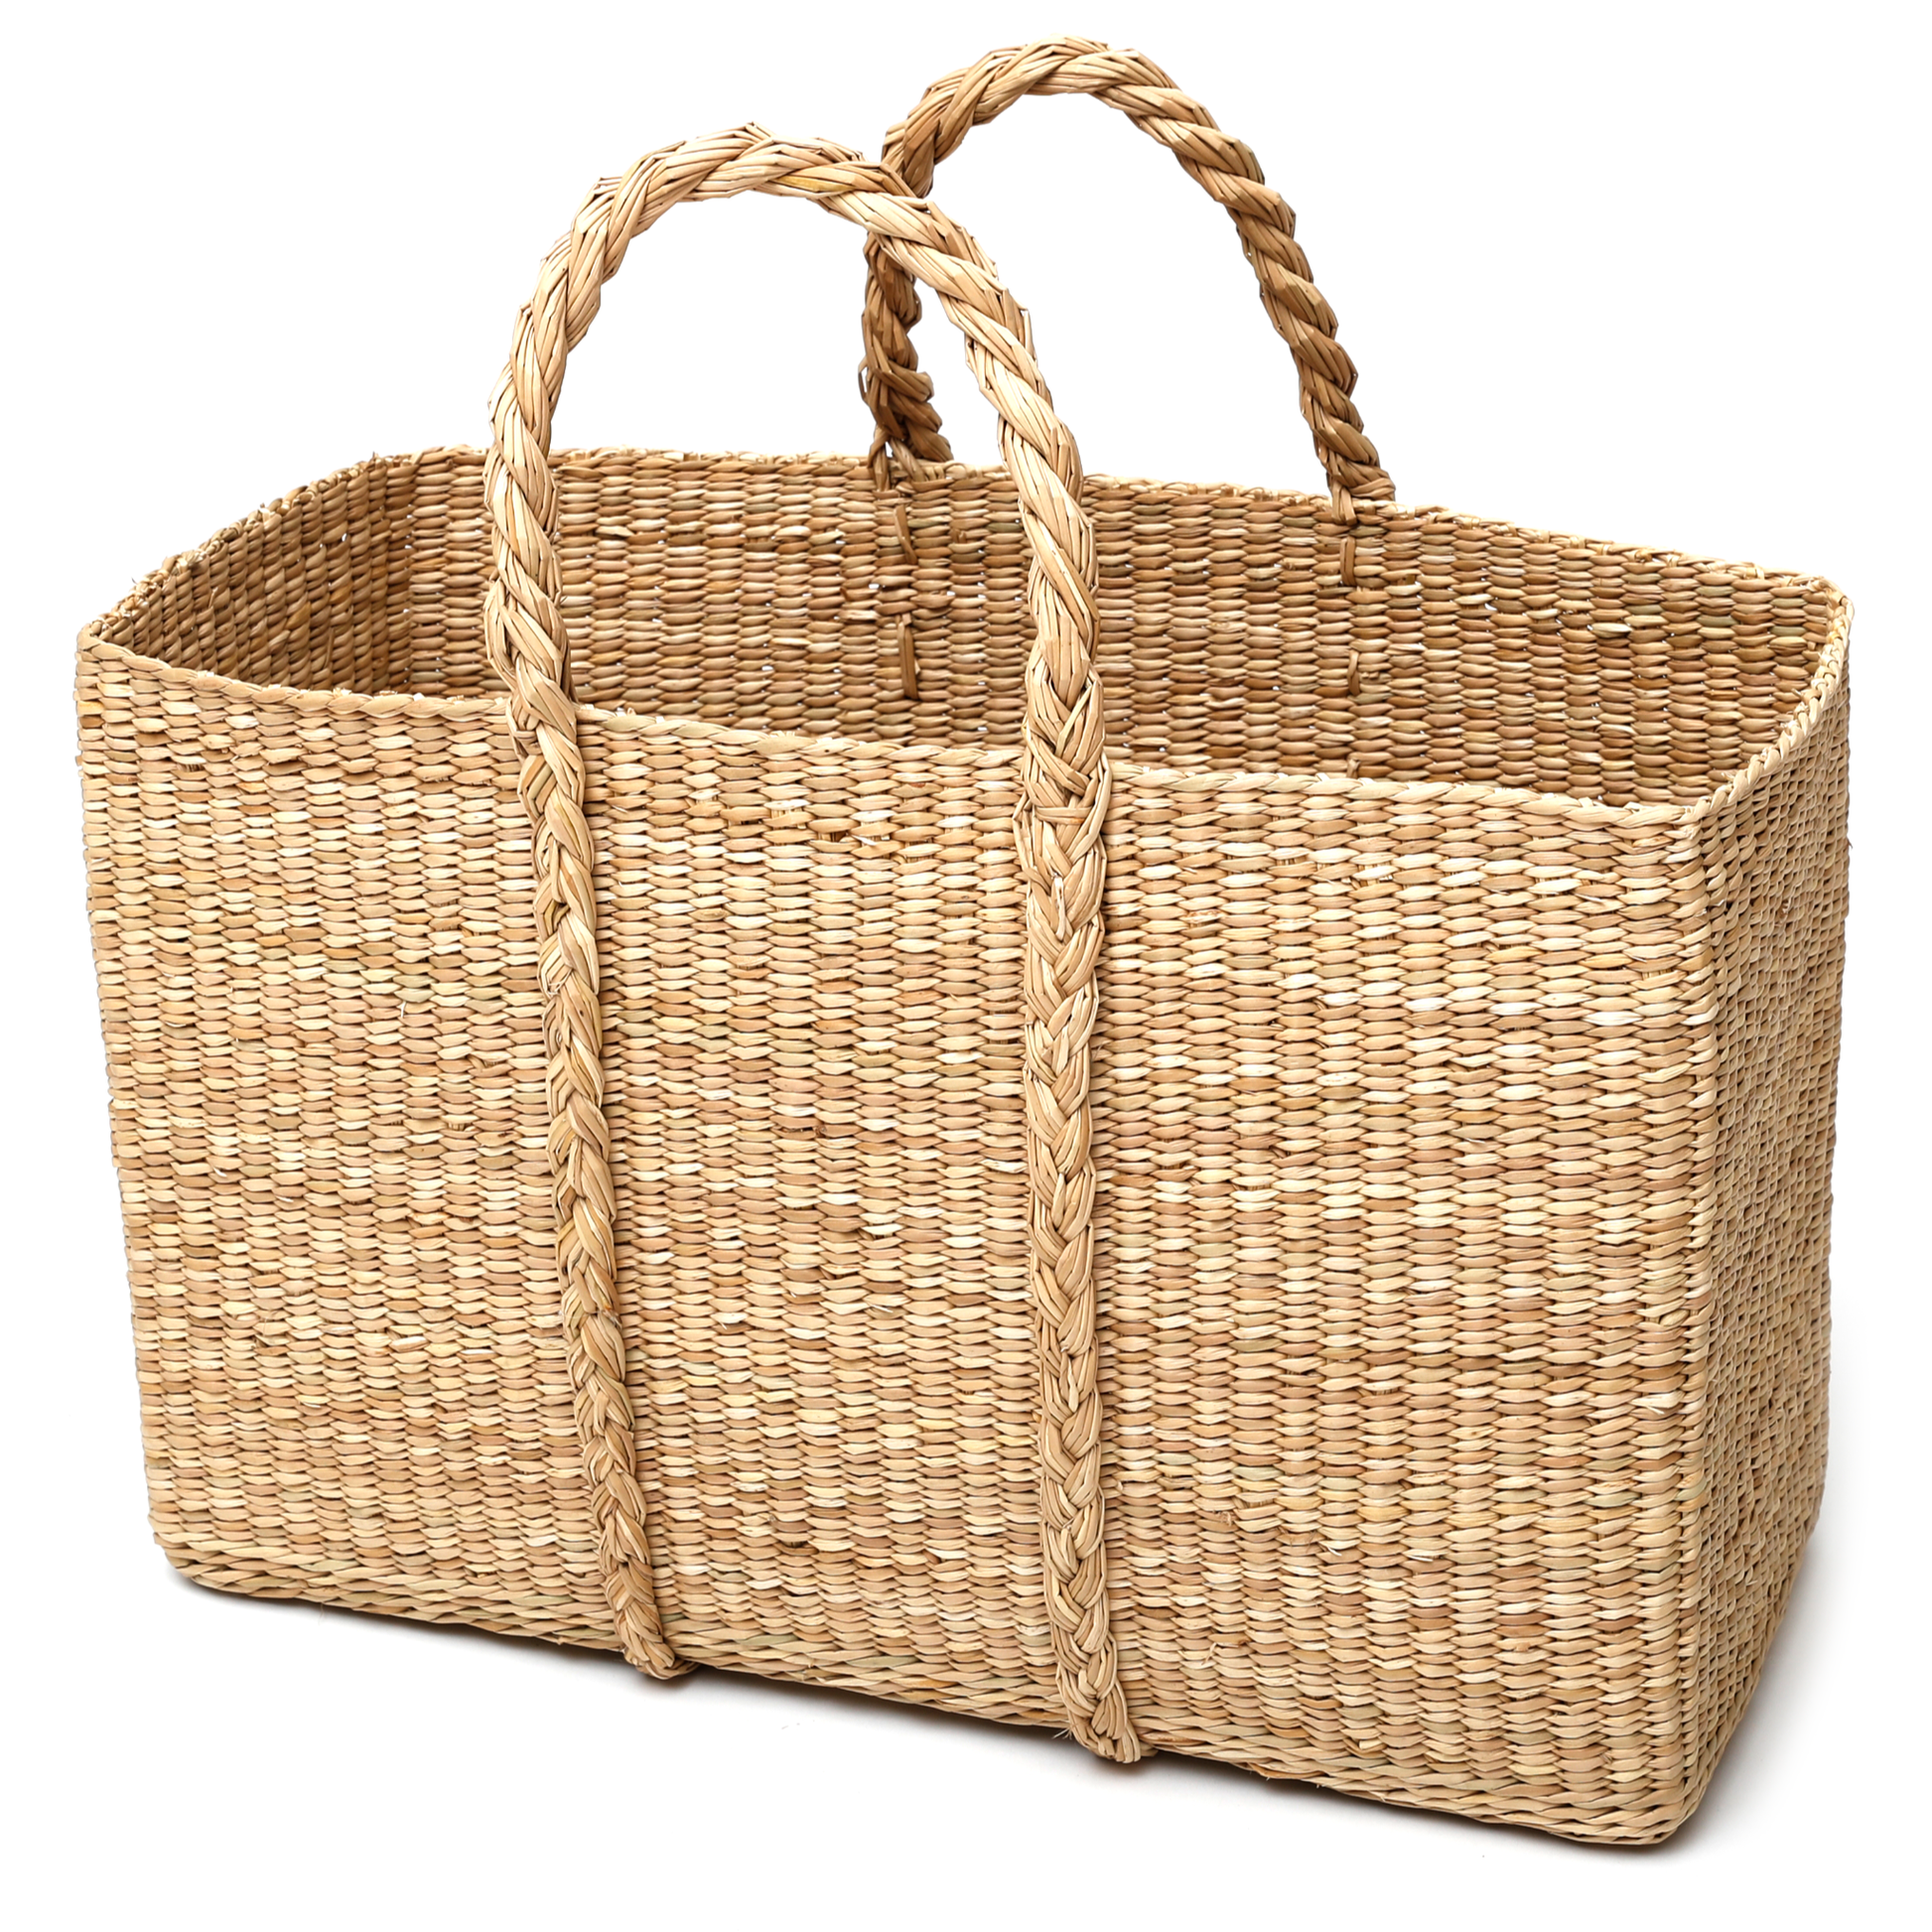 Intiearth-verano-braided-handle-basket-bag.jpg